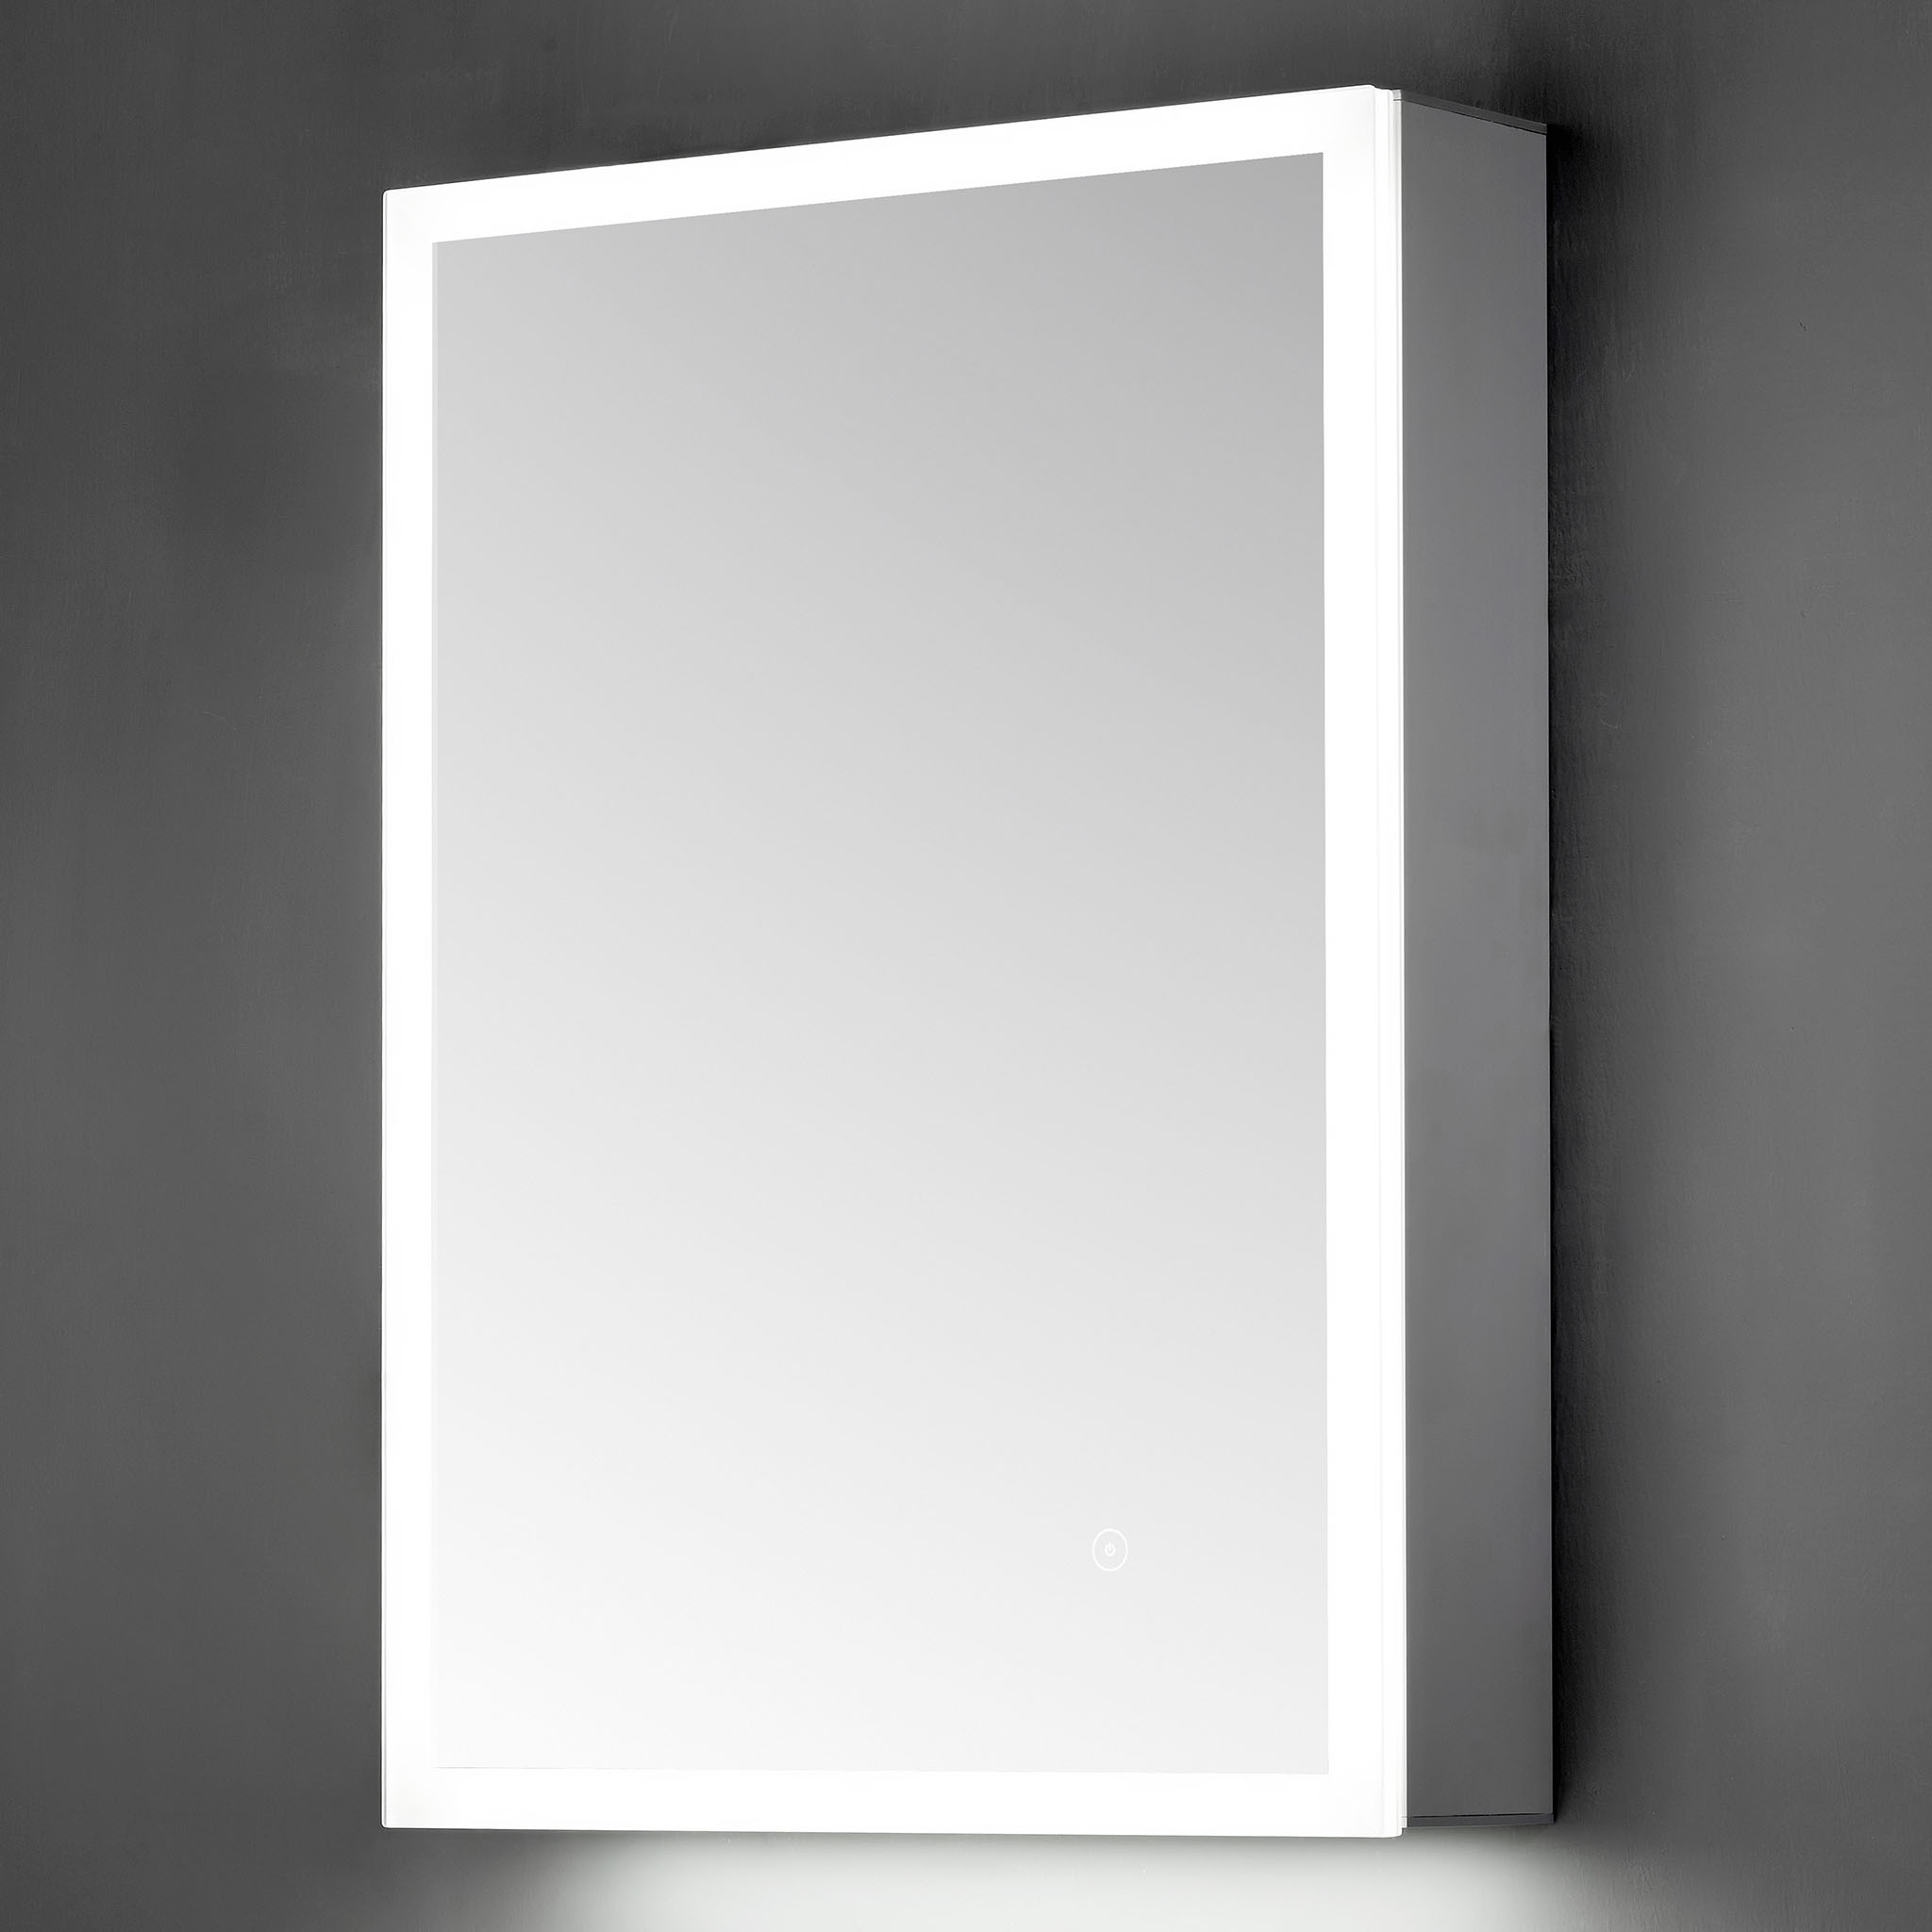 Union Elite 50 LED Mirror Cabinet 500 x 700mm